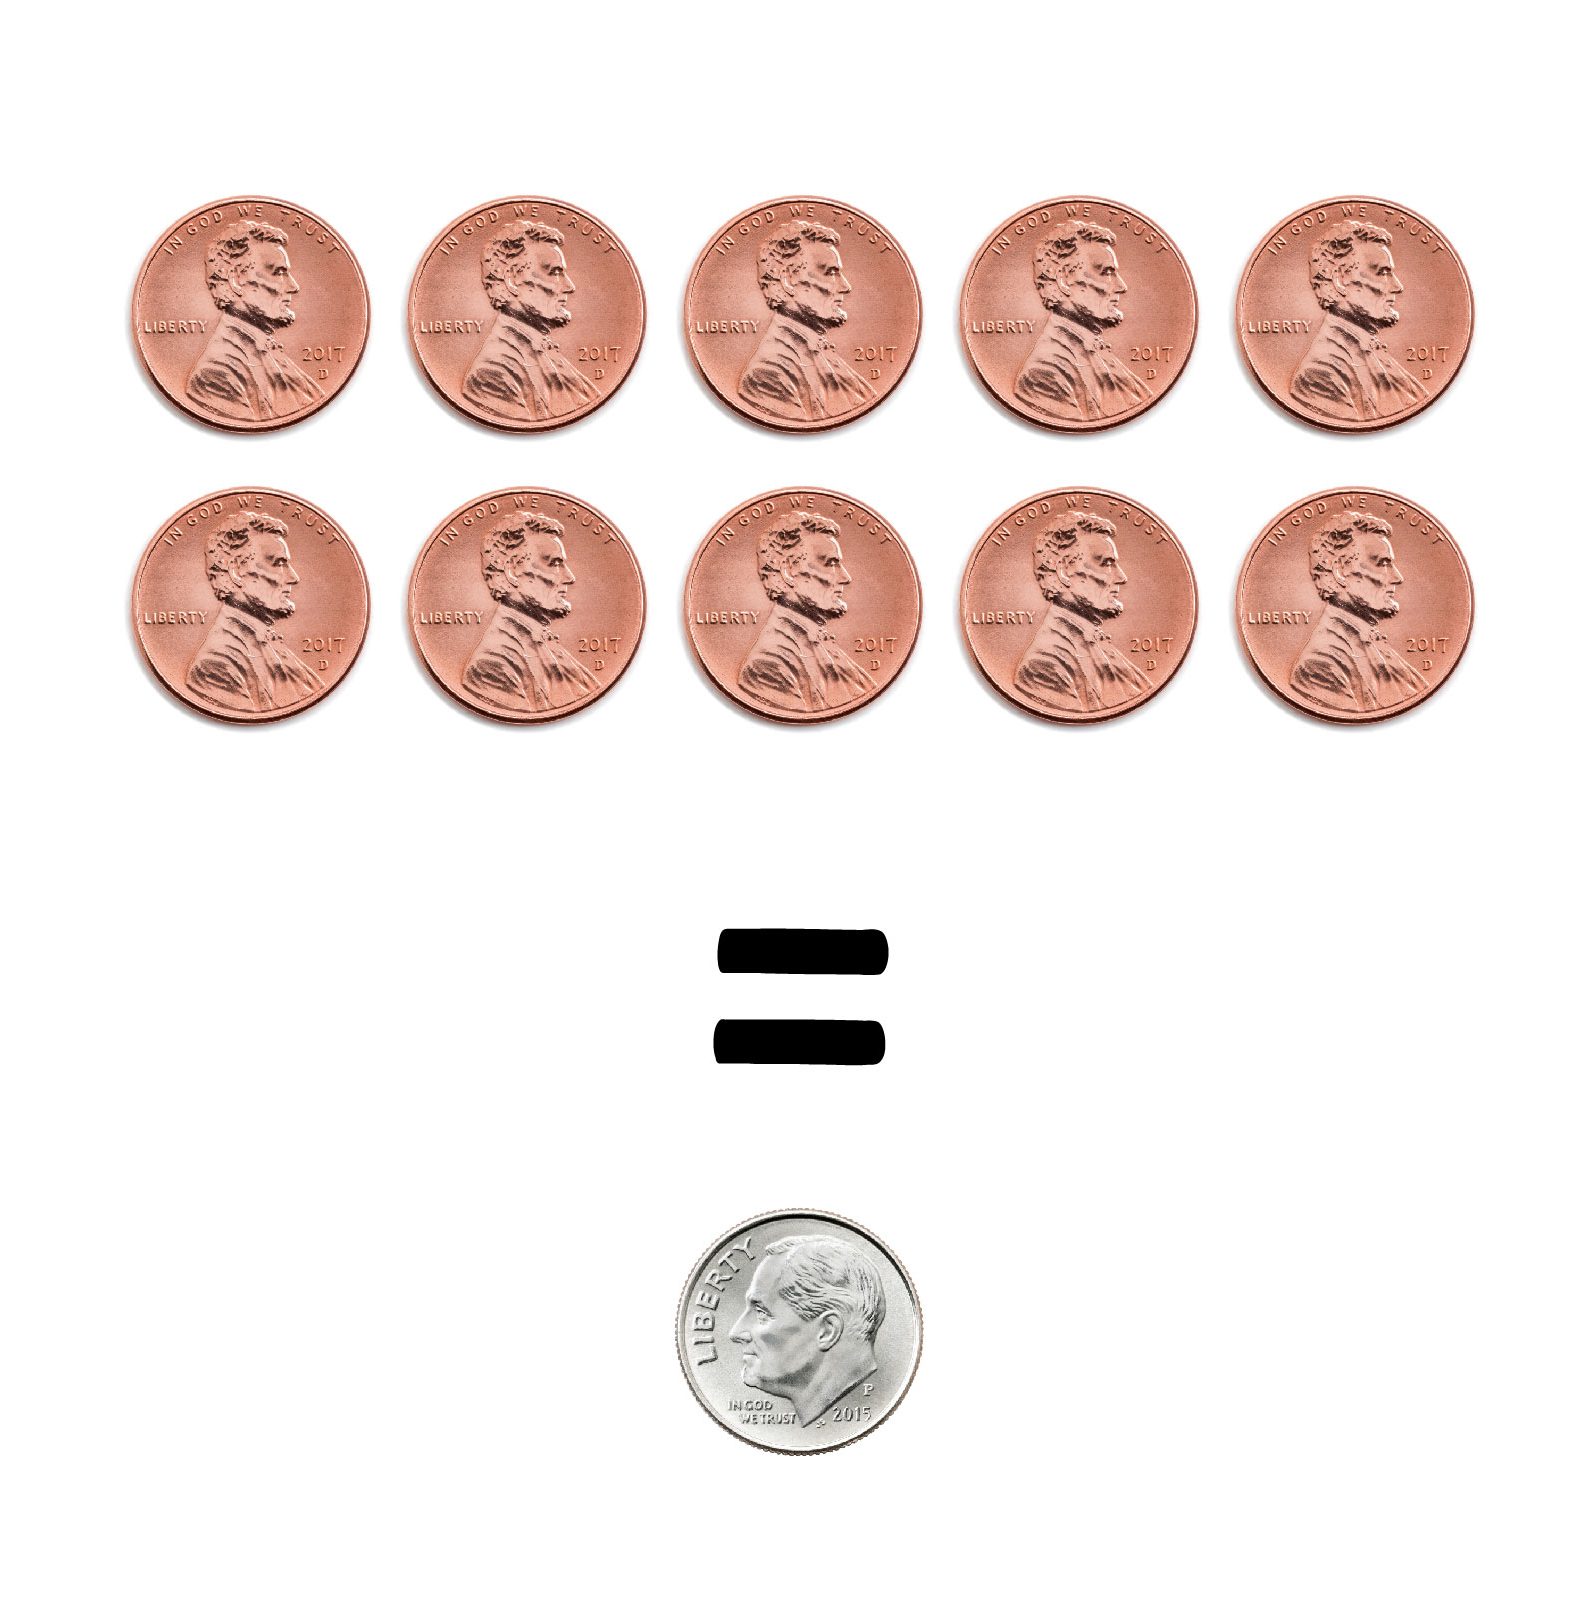 Ten pennies equal one dime